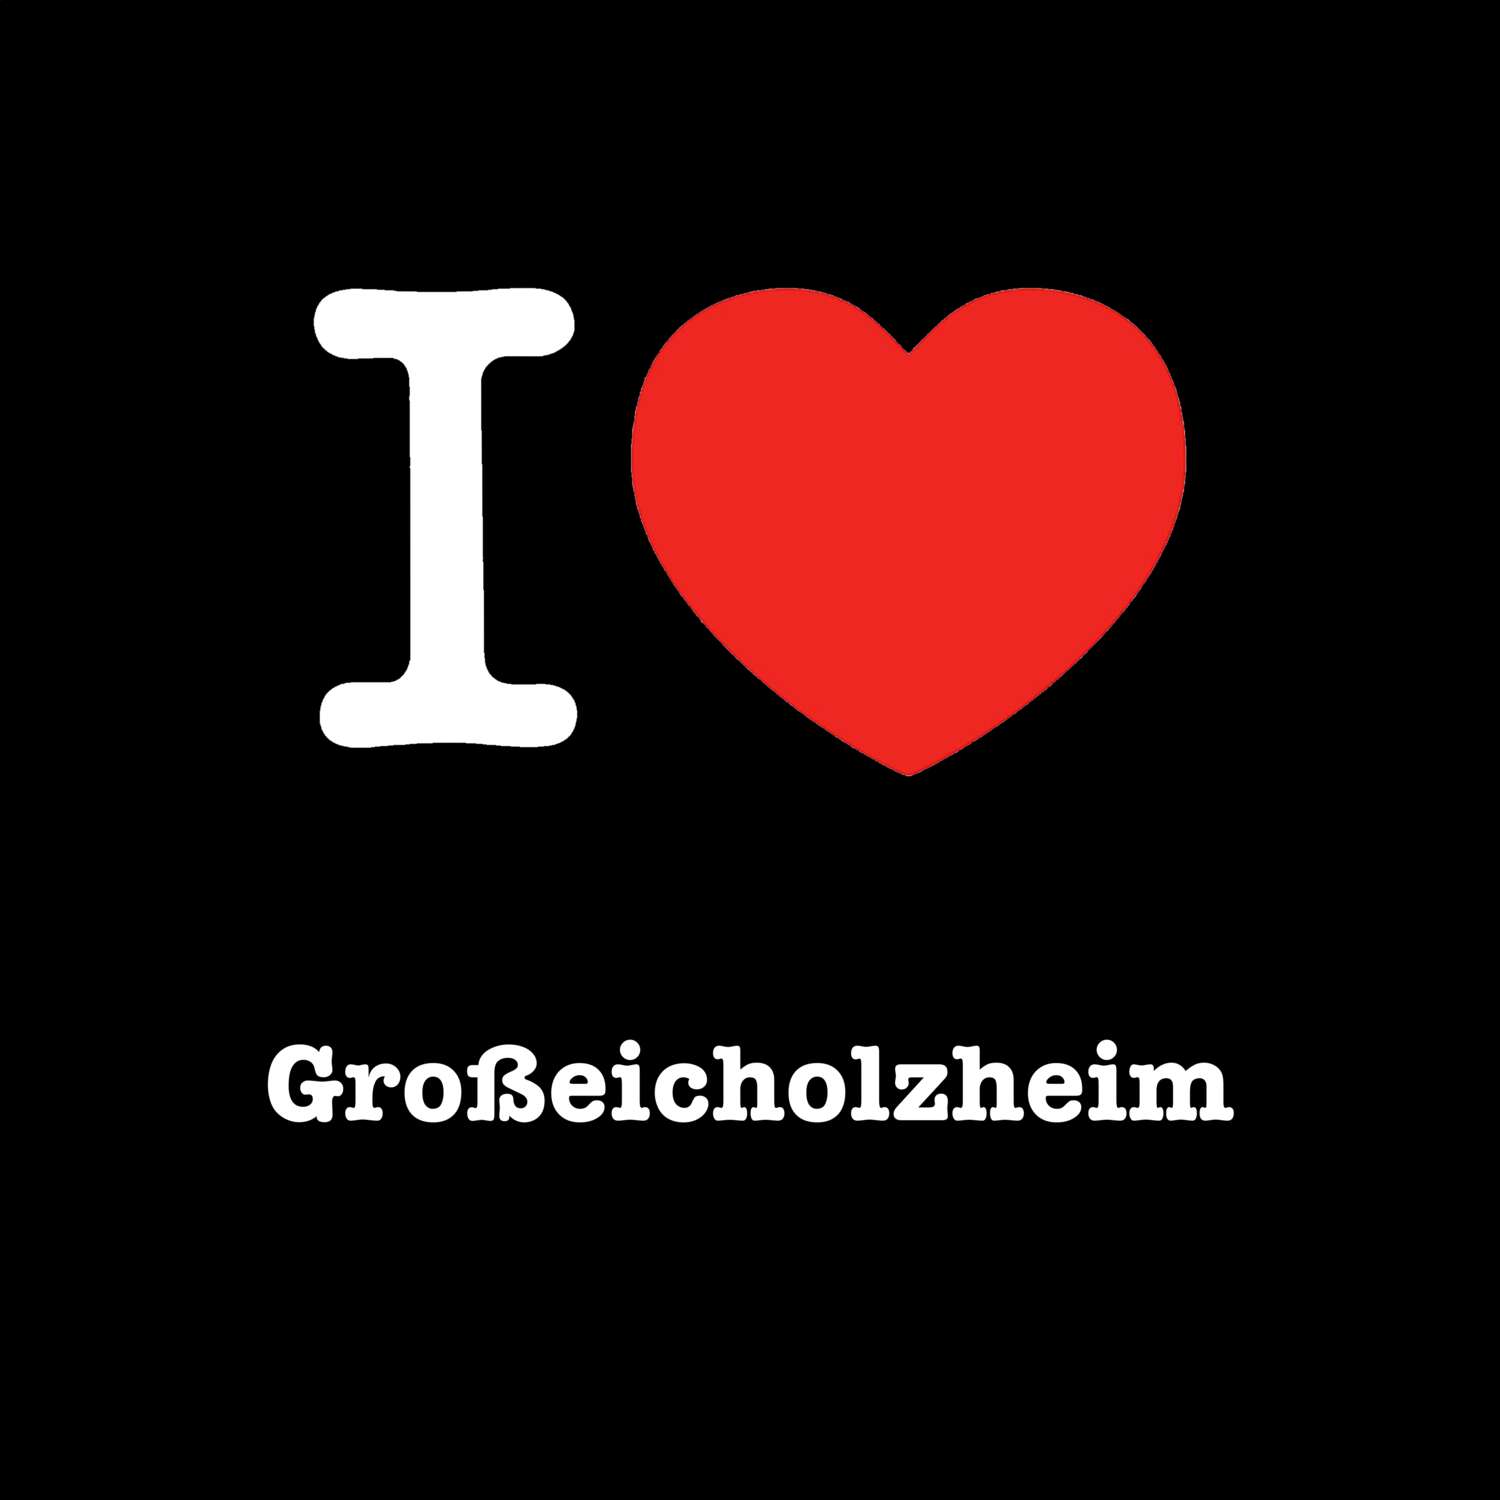 Großeicholzheim T-Shirt »I love«